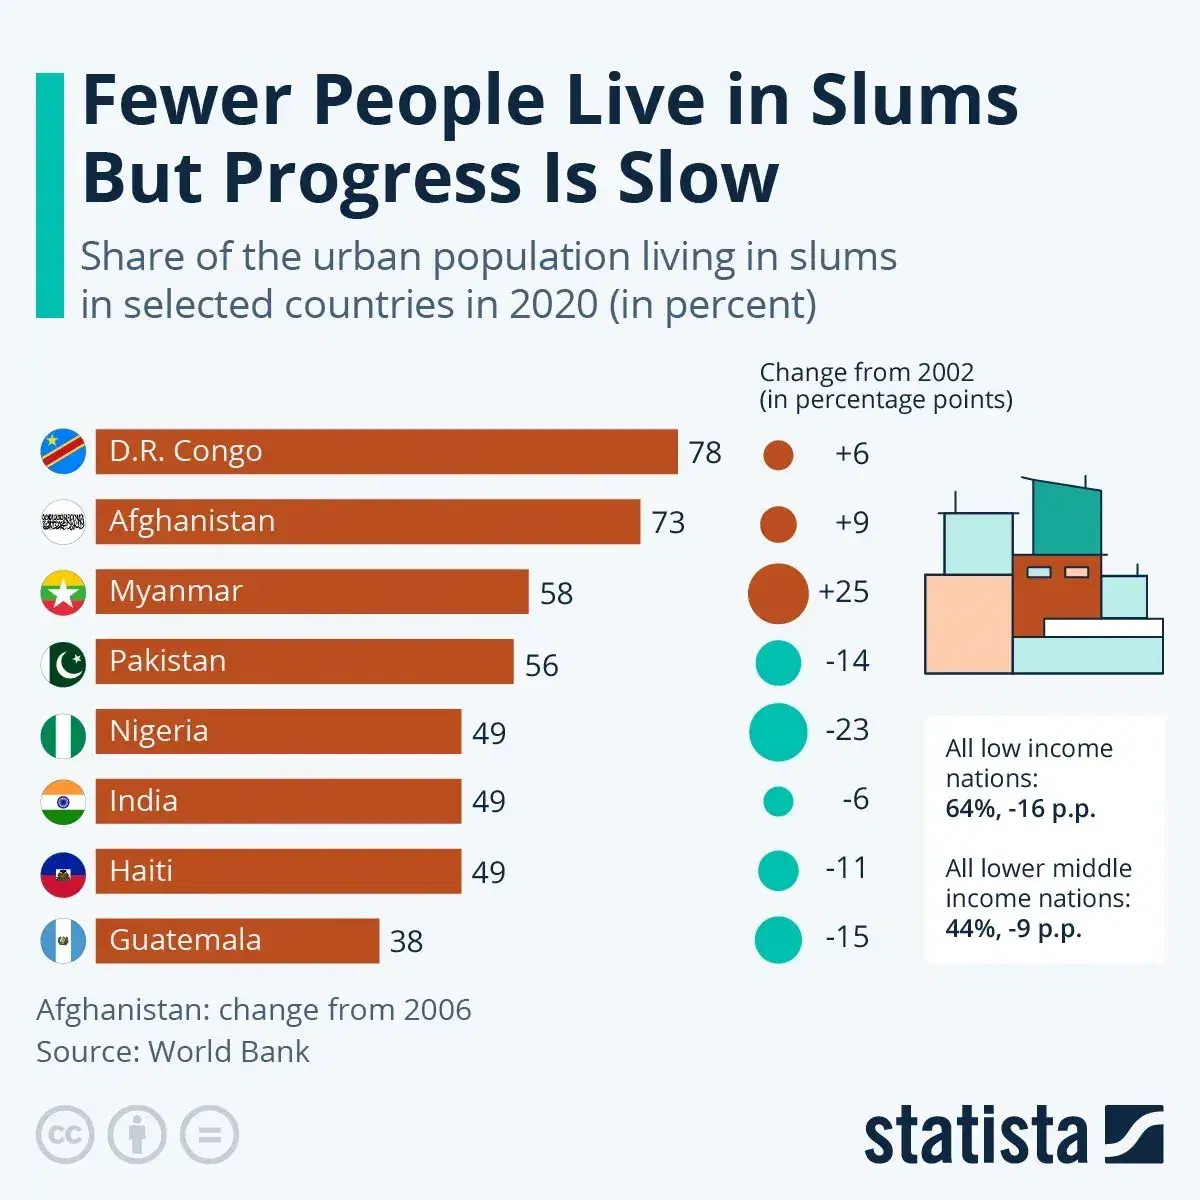 Change in Population Living in Slums